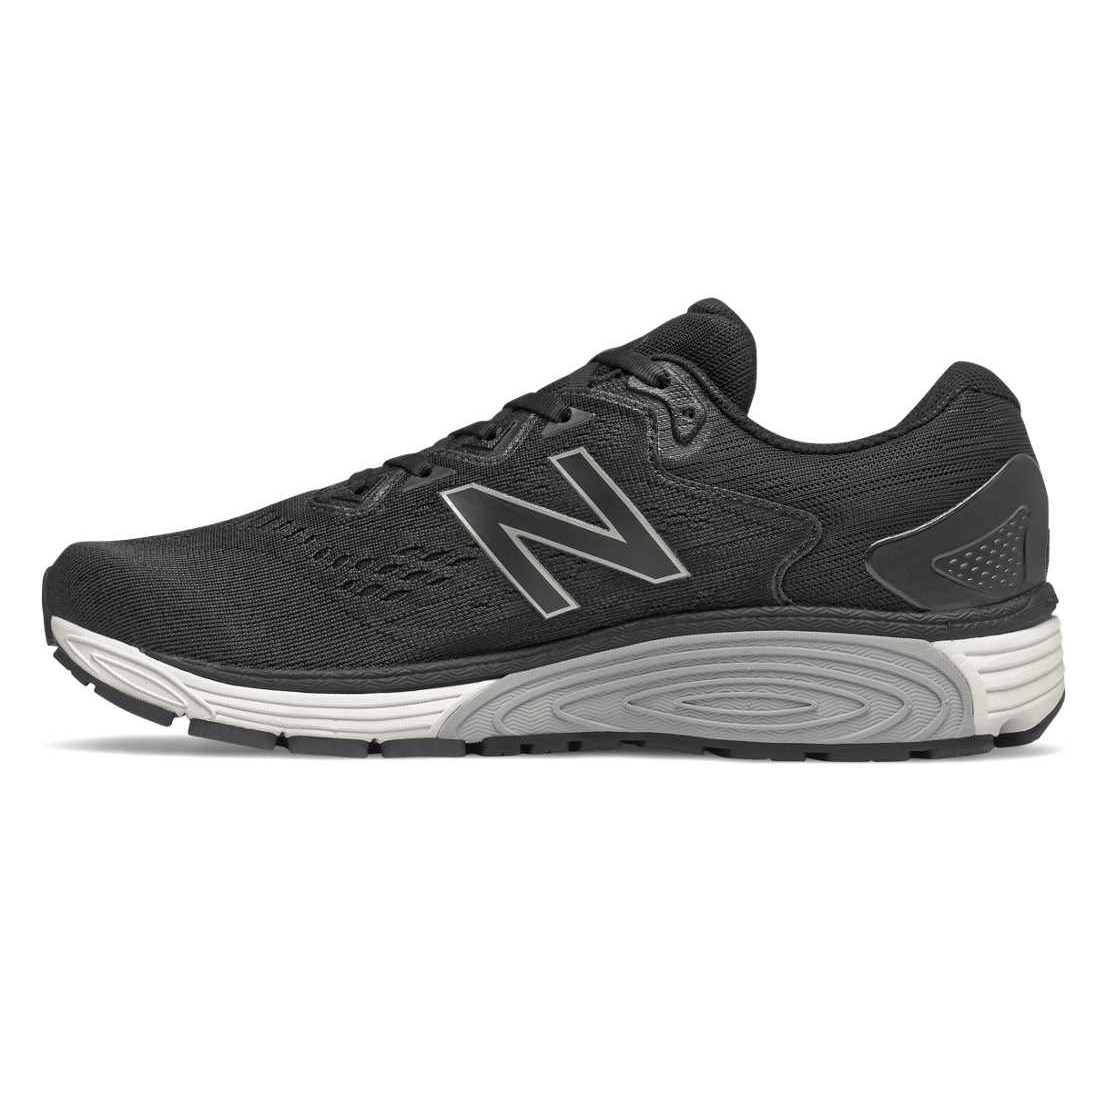 New Balance Vaygo - Mens Running Shoes - Black/White | Sportitude